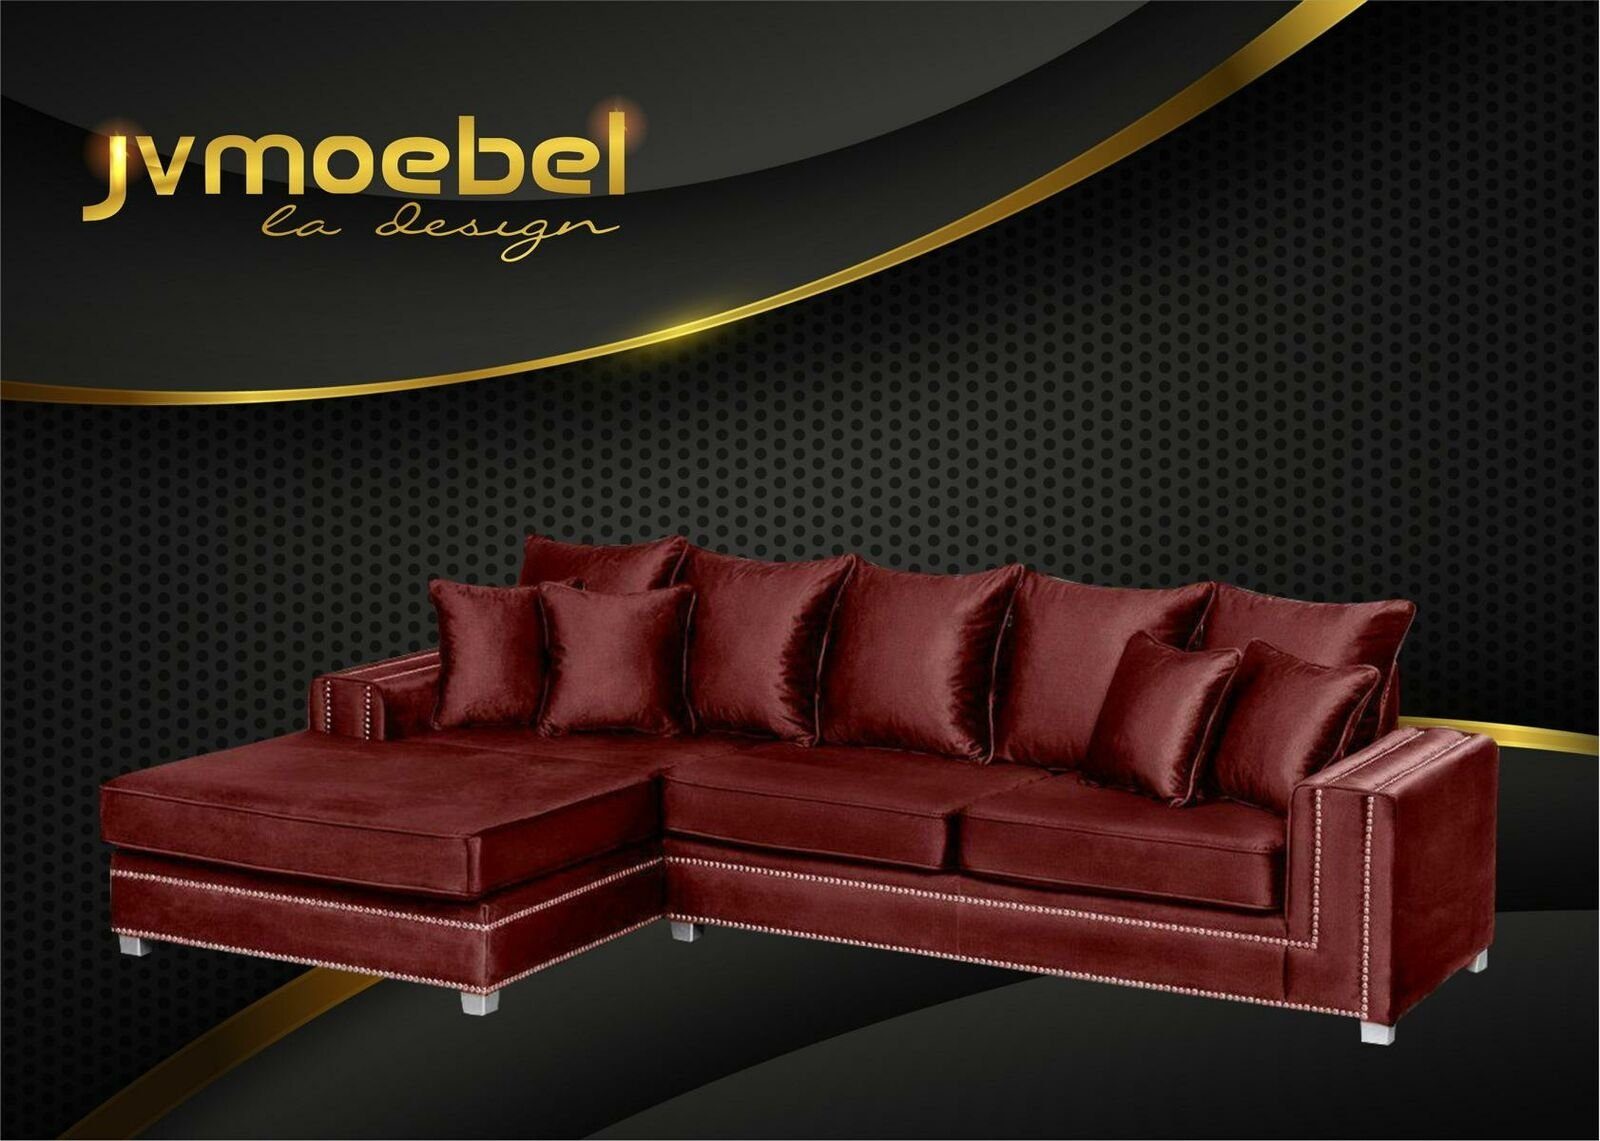 JVmoebel Ecksofa, Ecksofa L-form Textil Wohnlandschaft Couch Rot Polster Luxus Design